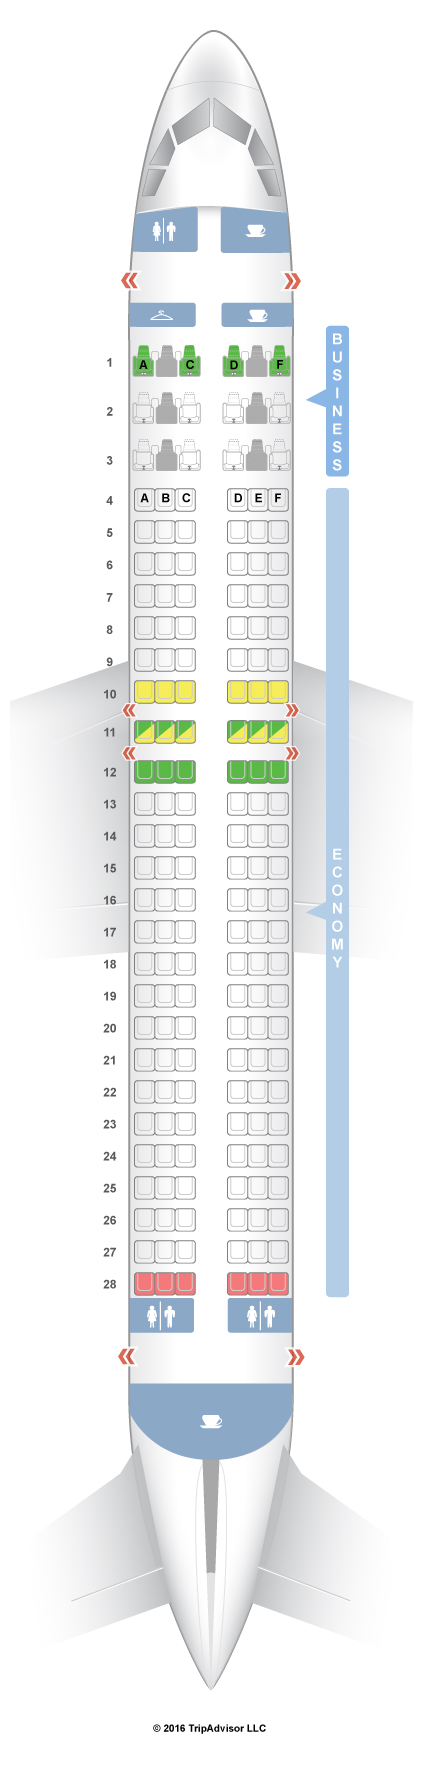 Seatguru Seat Map Brussels Airlines